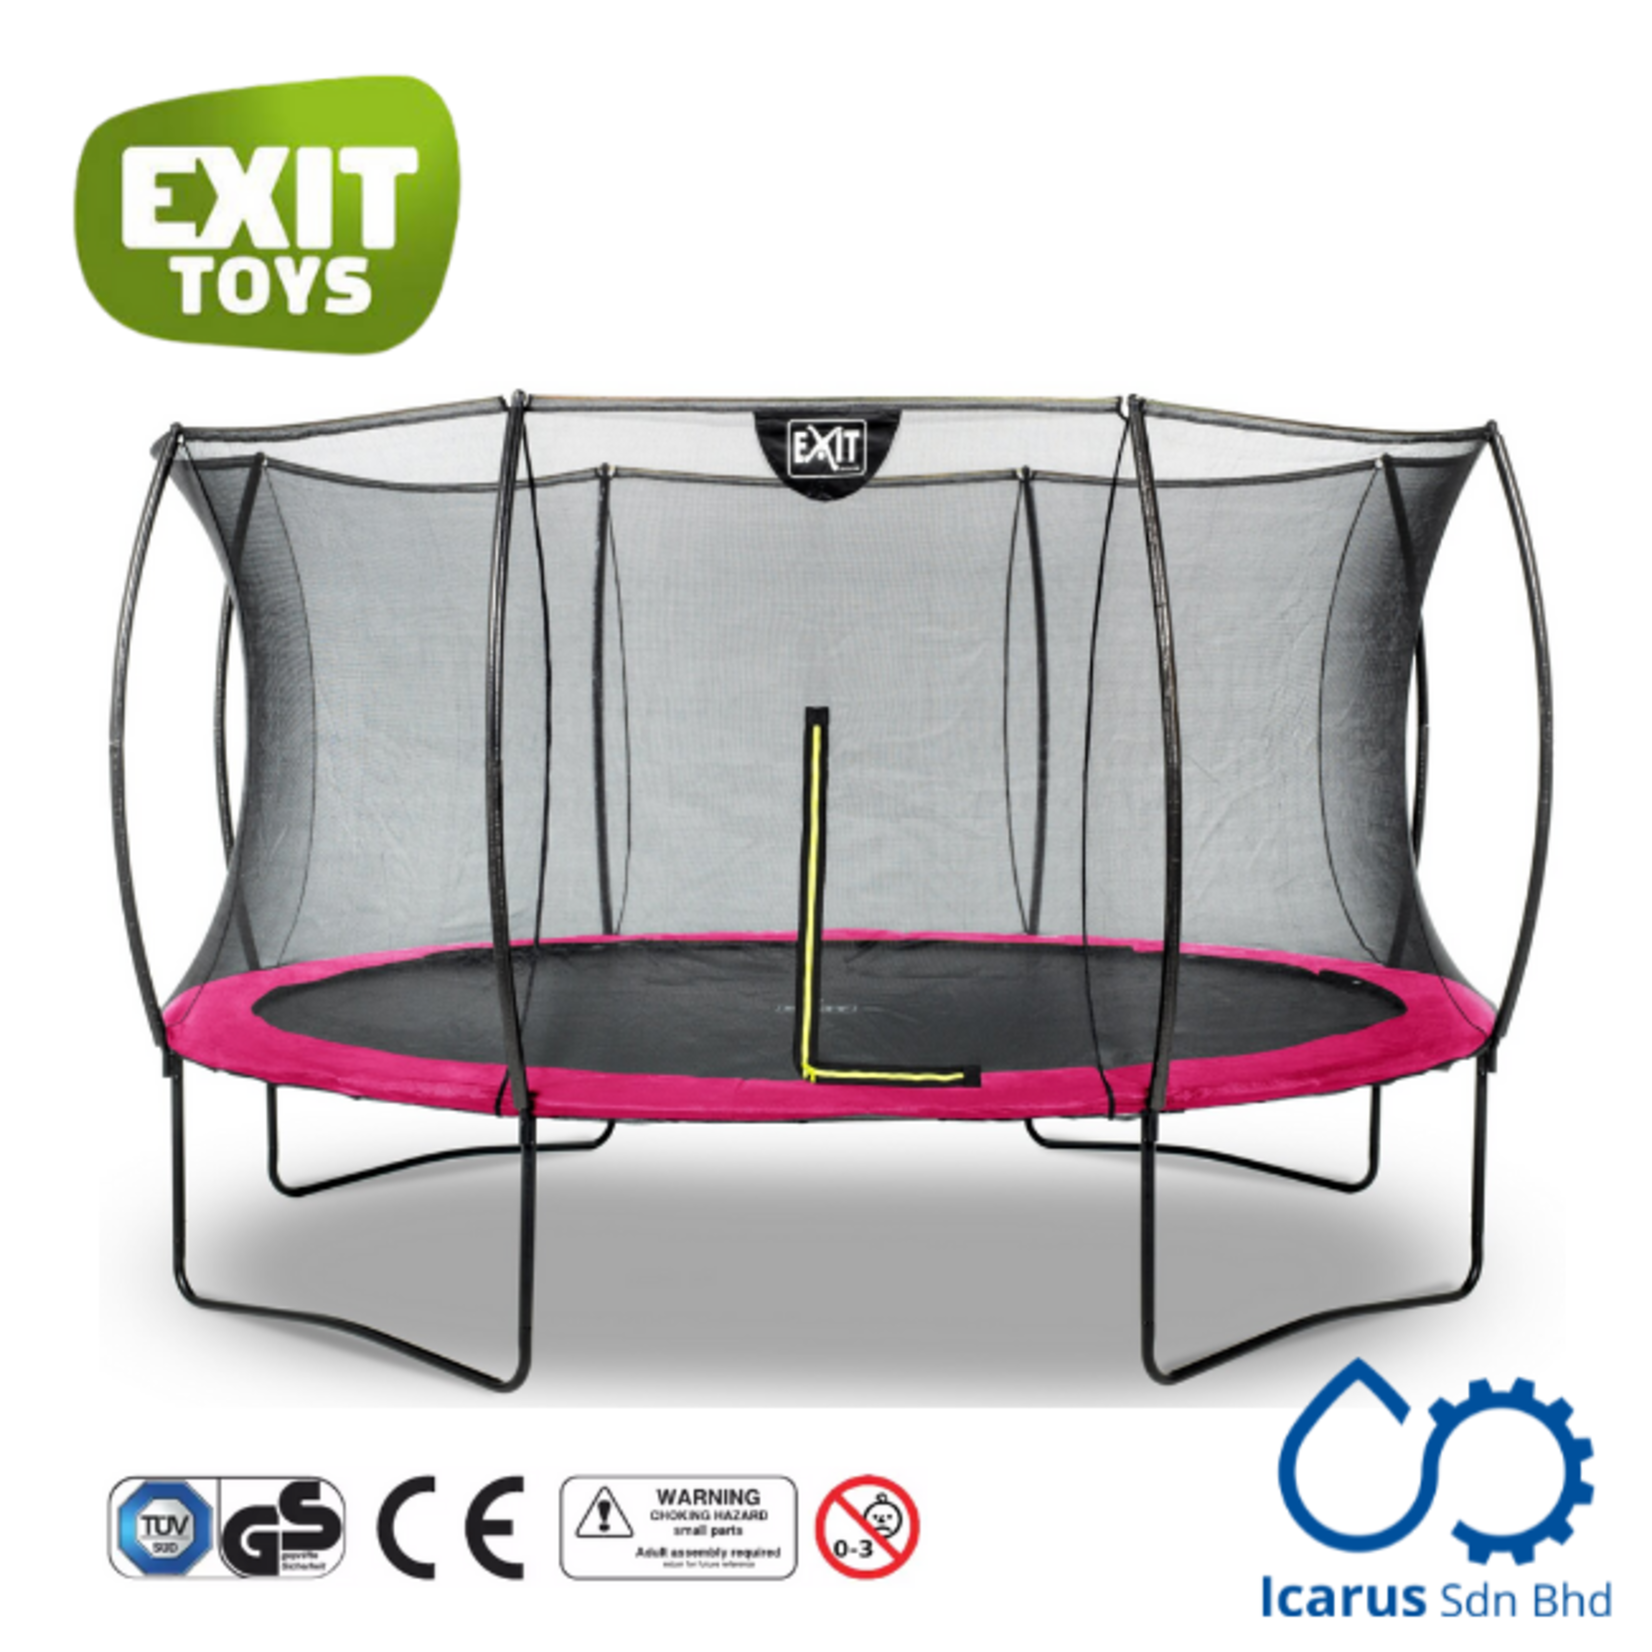 EXIT Toys Silhouette Trampoline ø 366 cm (12ft), Color Pink